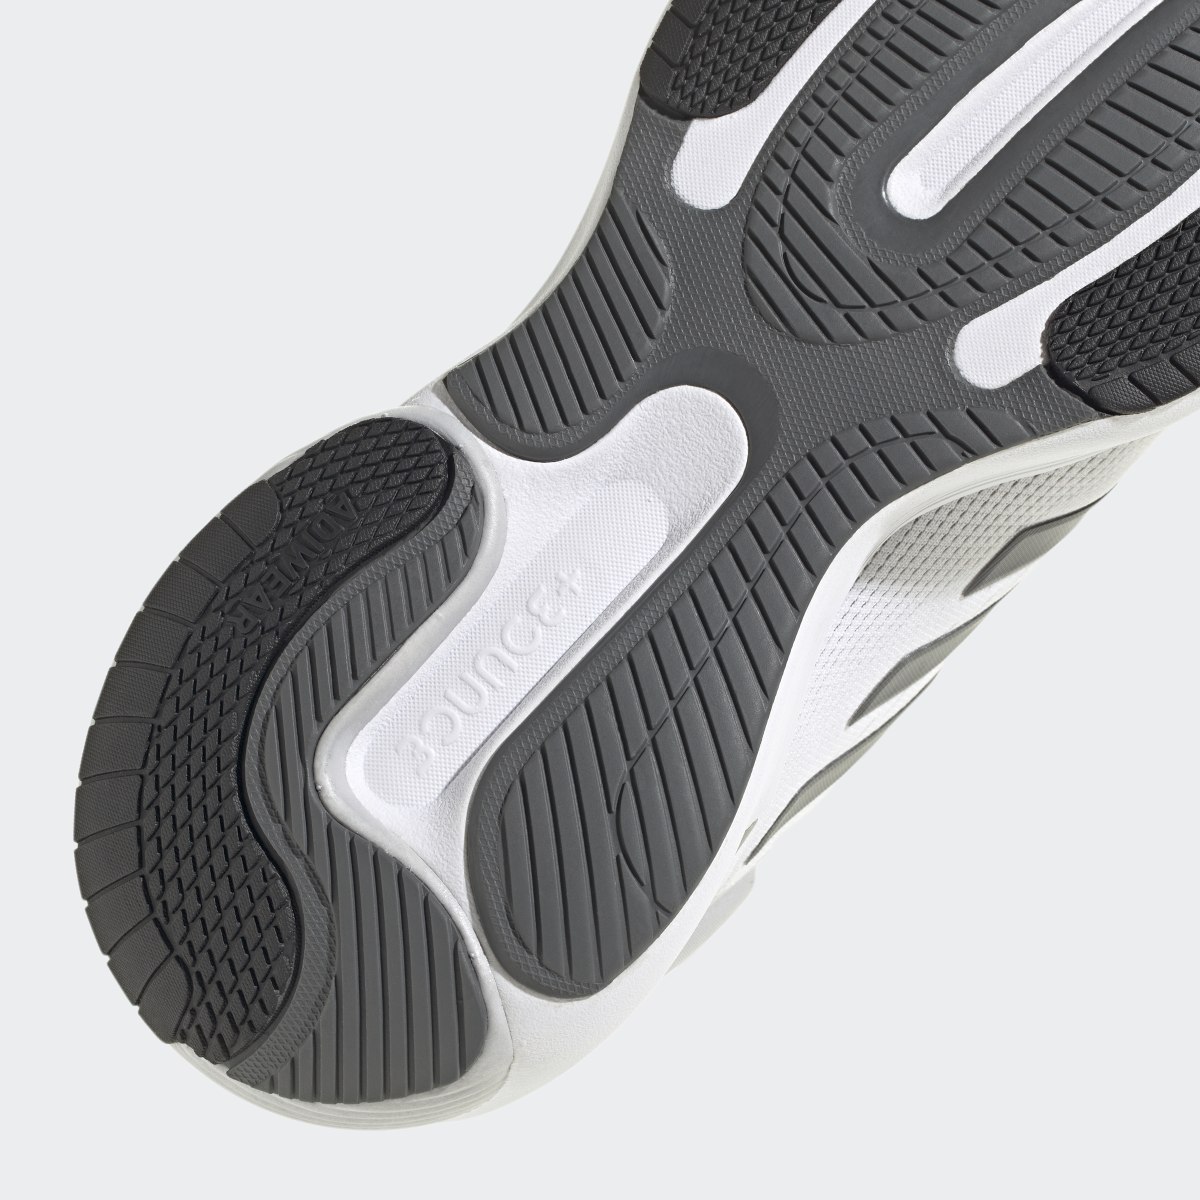 Adidas Response Super 3.0 Shoes. 9